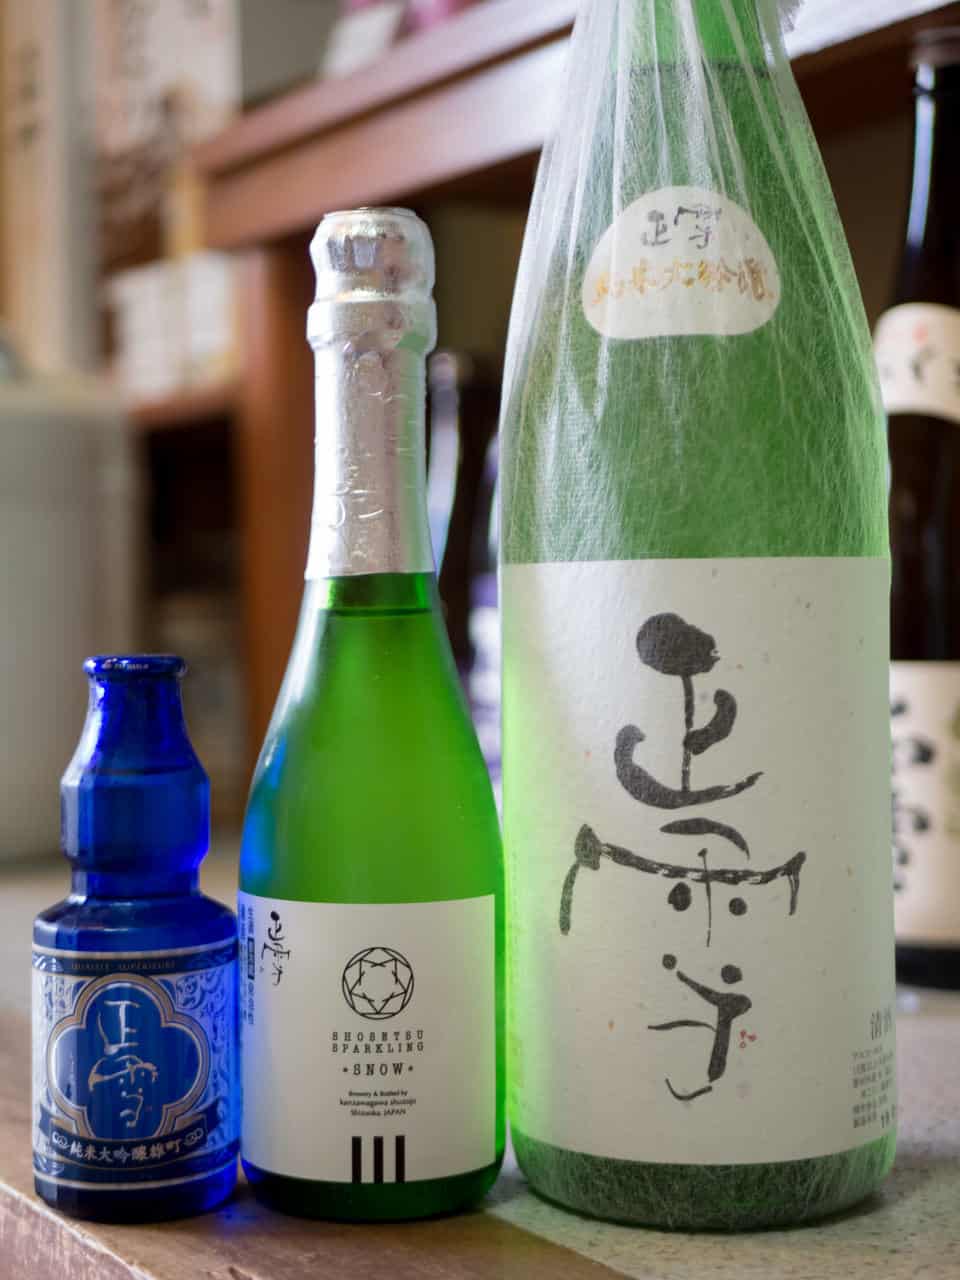 Shosetsu Sake Brewery: Delicious Sake Created in Yui in Shizuoka Prefecture